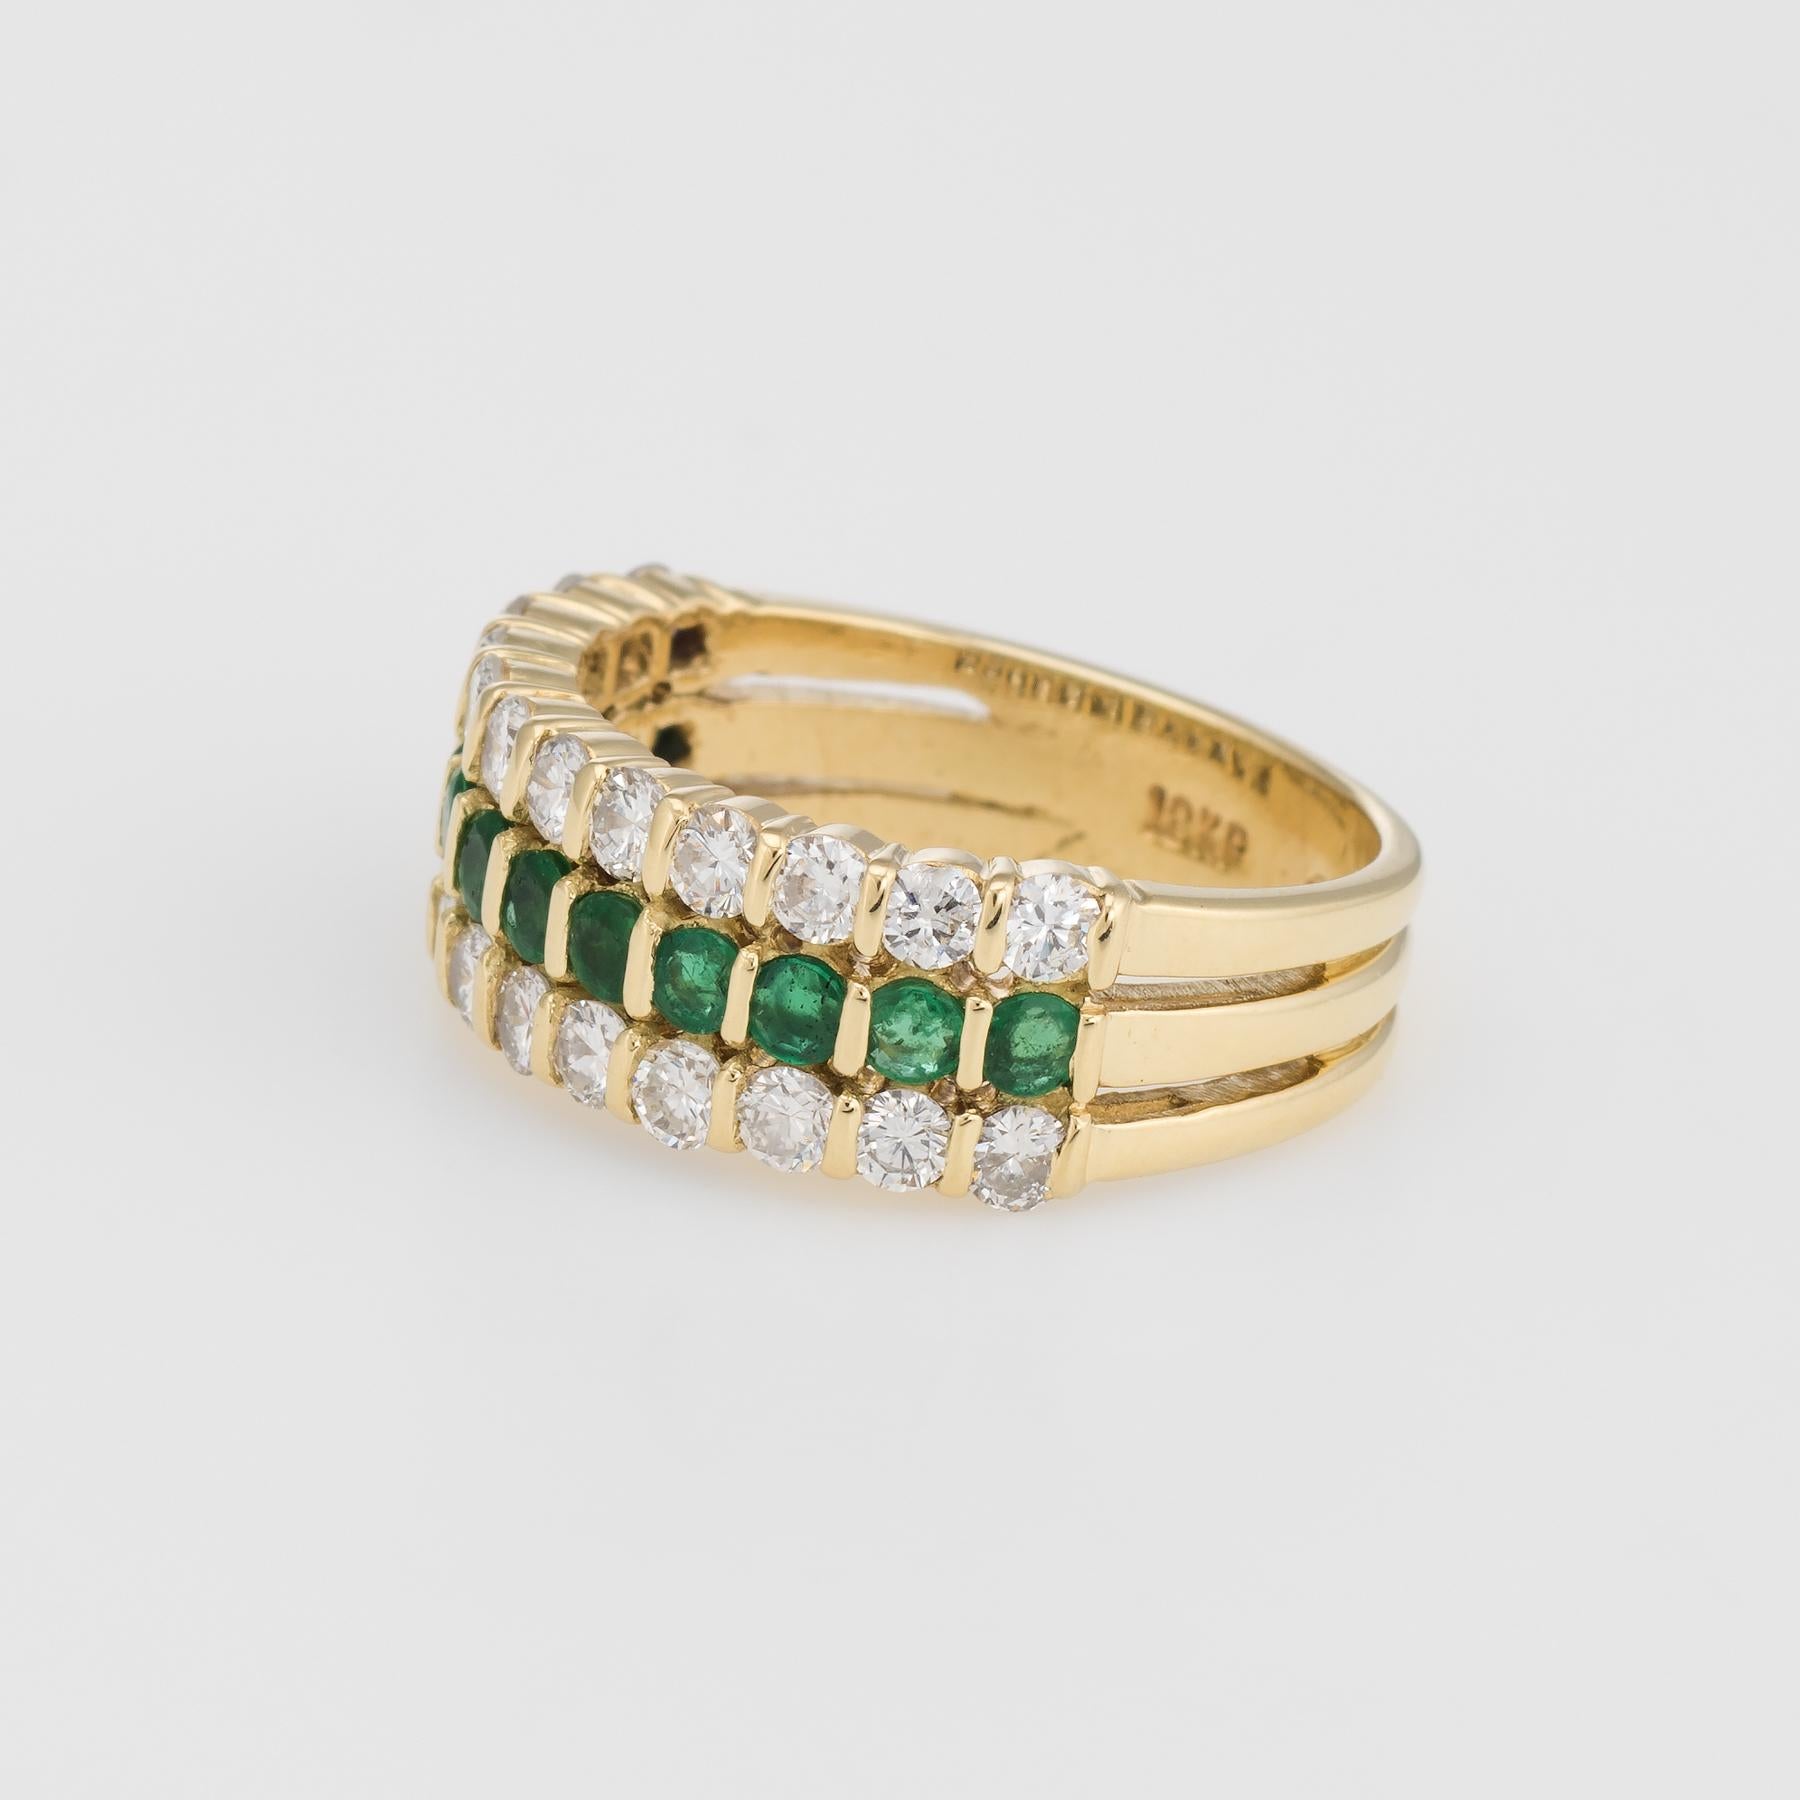 Women's Vintage Diamond Emerald Ring 18 Karat Yellow Gold Estate Fine Jewelry Band